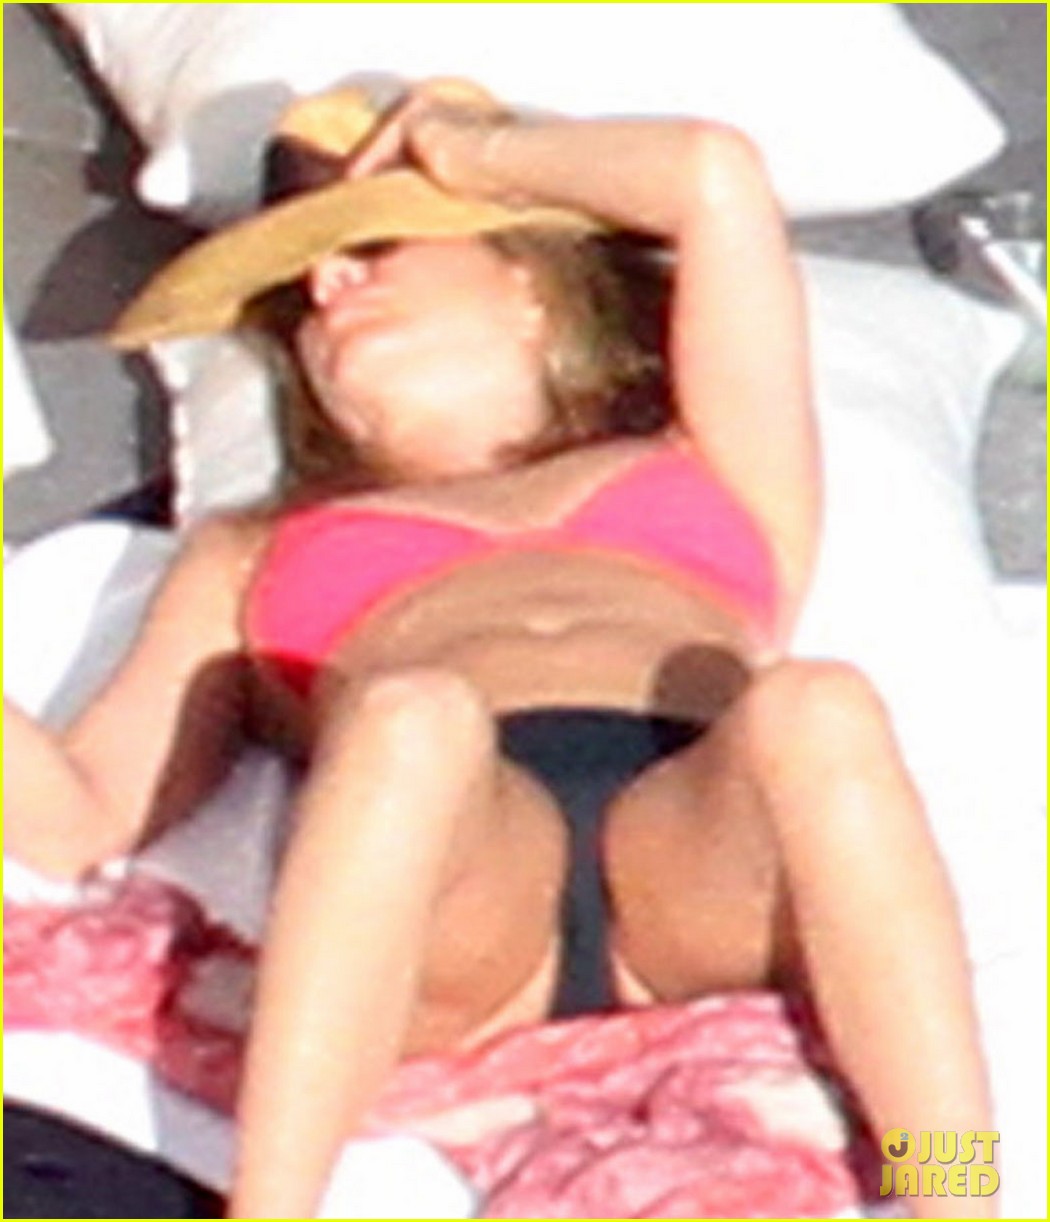 Jennifer Aniston wears a pink bikini top while sunbathing with her shirtles...